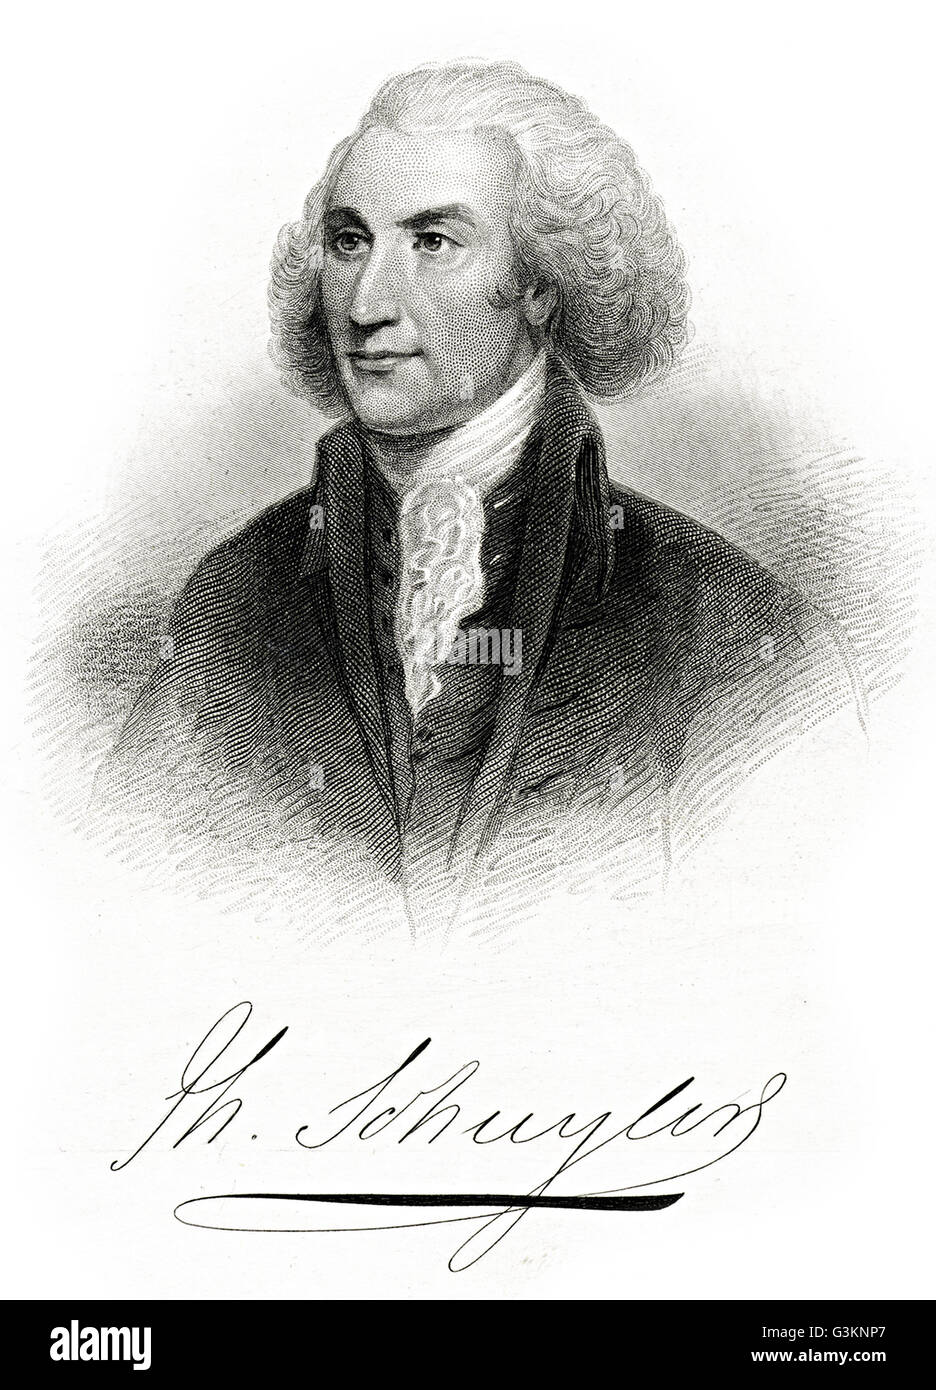 Philip Schuyler, 1733 - 1804 Stock Photo